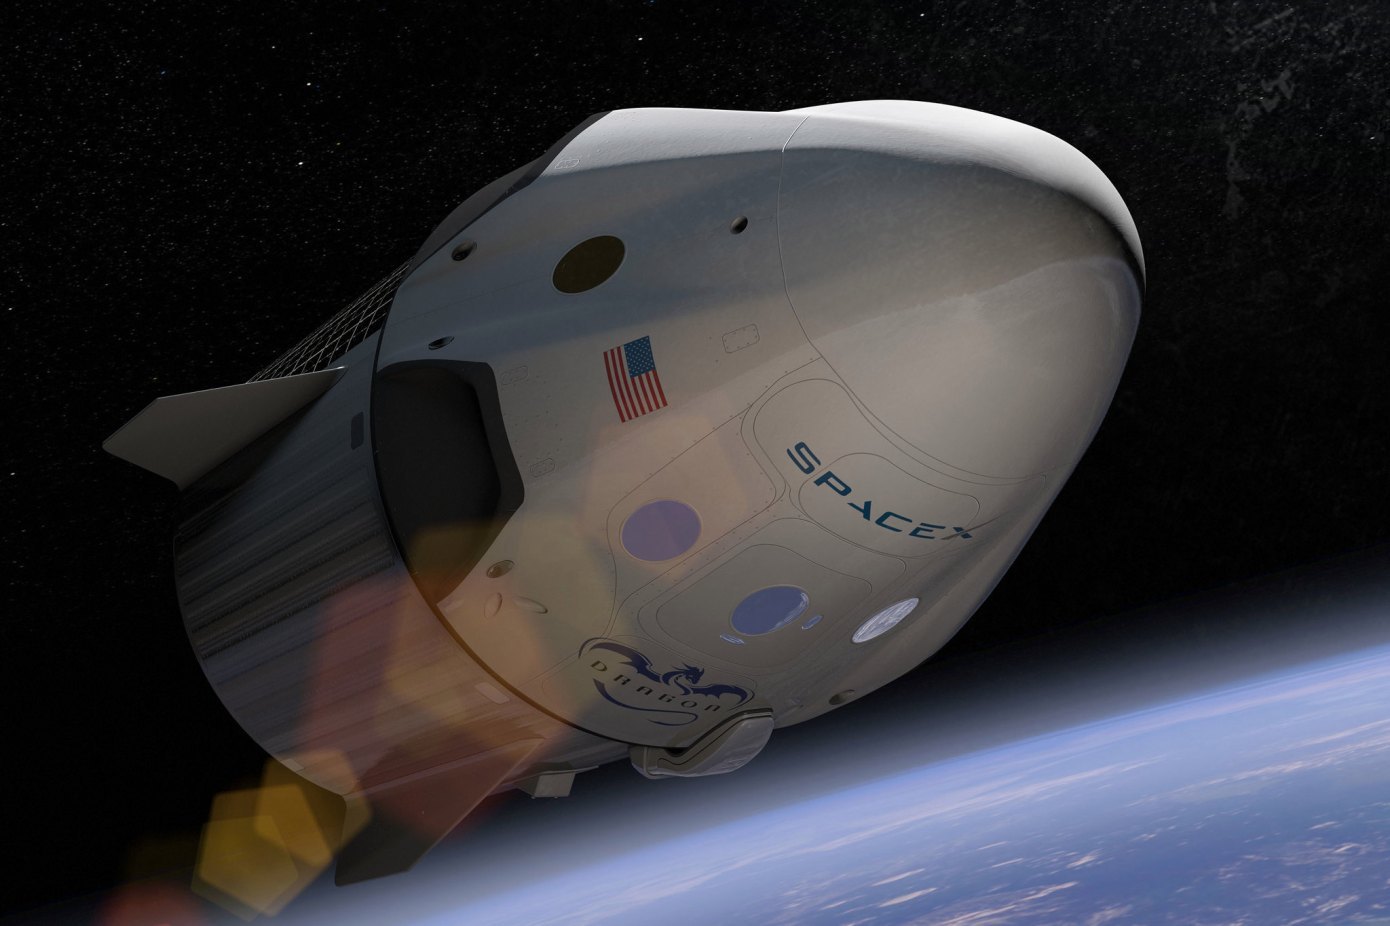 SpaceXの有人運用1号機にJAXAの野口聡一宇宙飛行士が搭乗